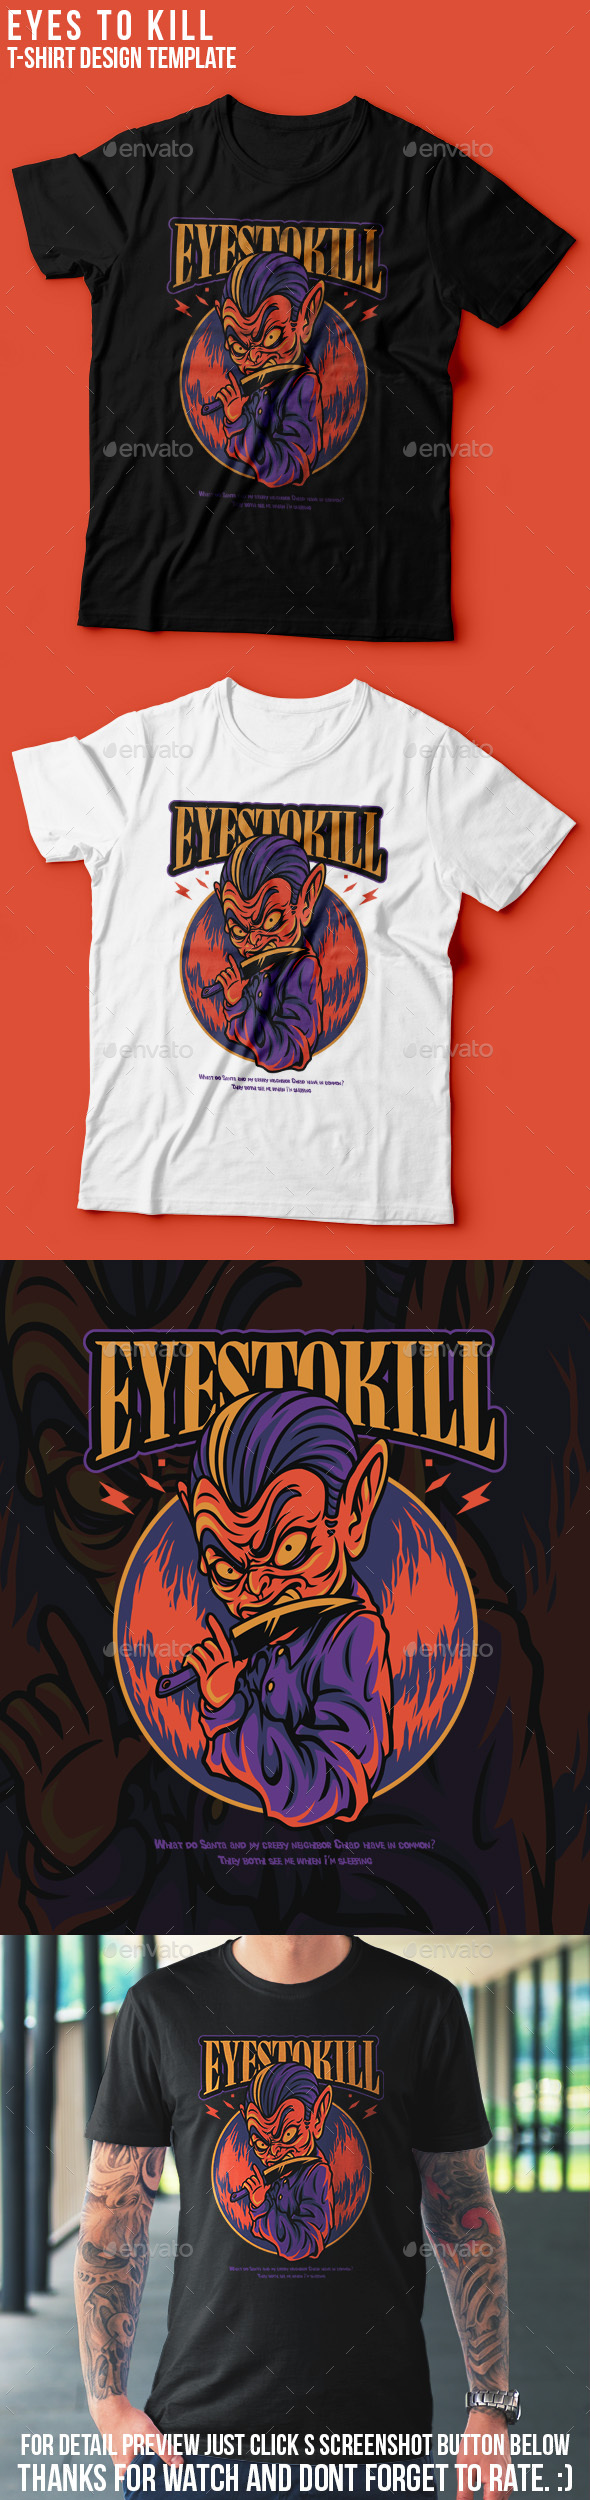 Eyes to Kill T-Shirt Design